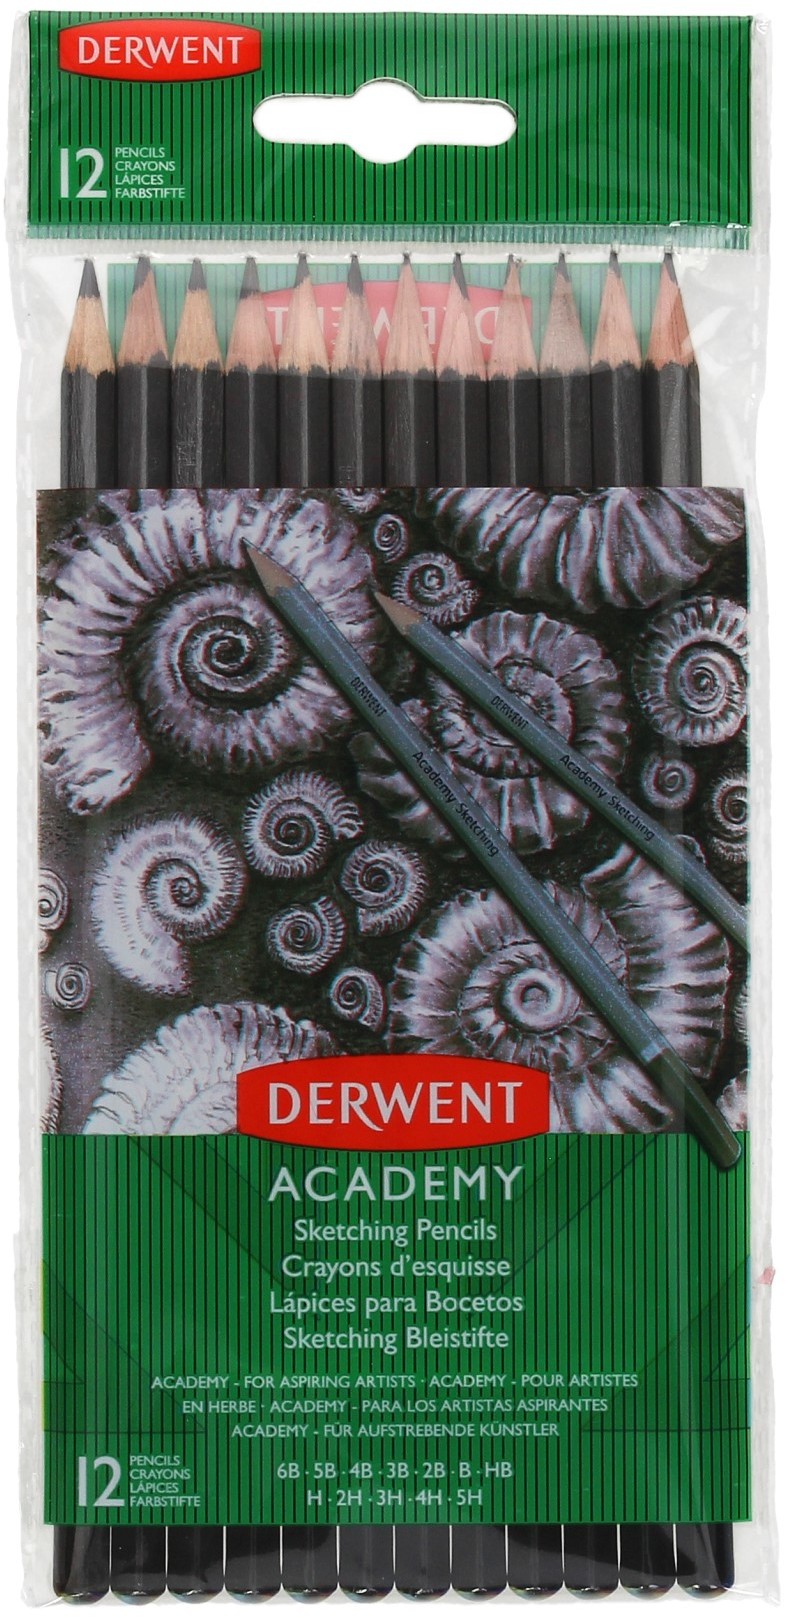 DERWENT Ołówki techniczne - zestaw 12 szt. 5H-6B Derwent Academy 2300412